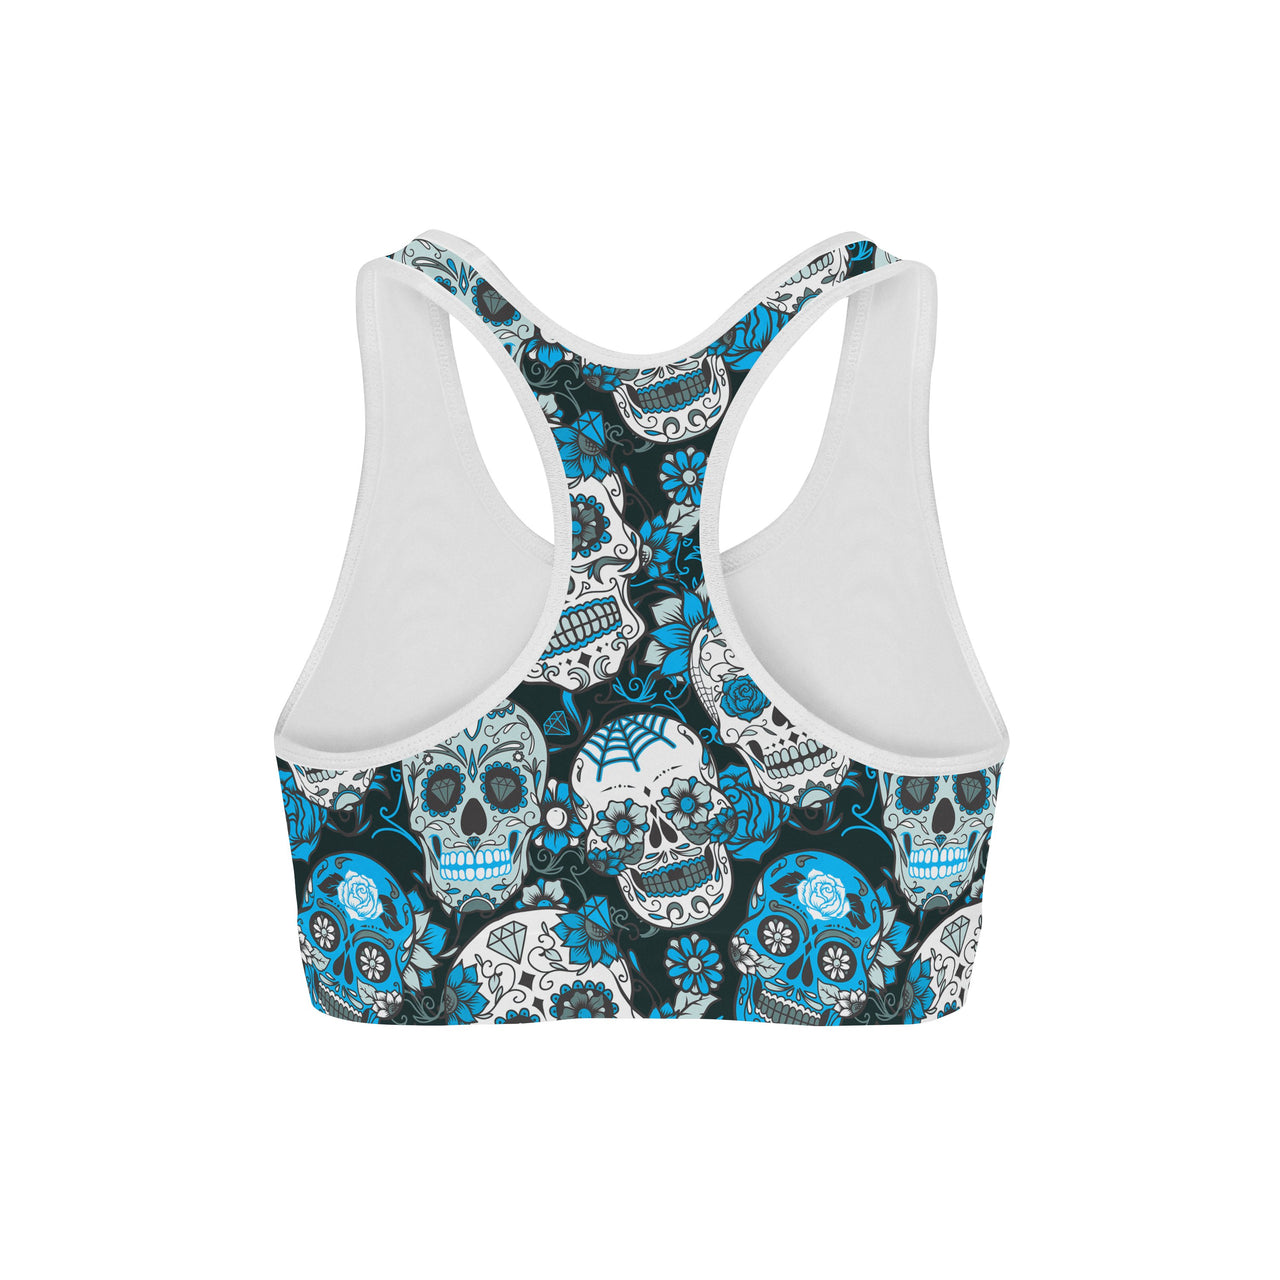 blue sports bra with skulls